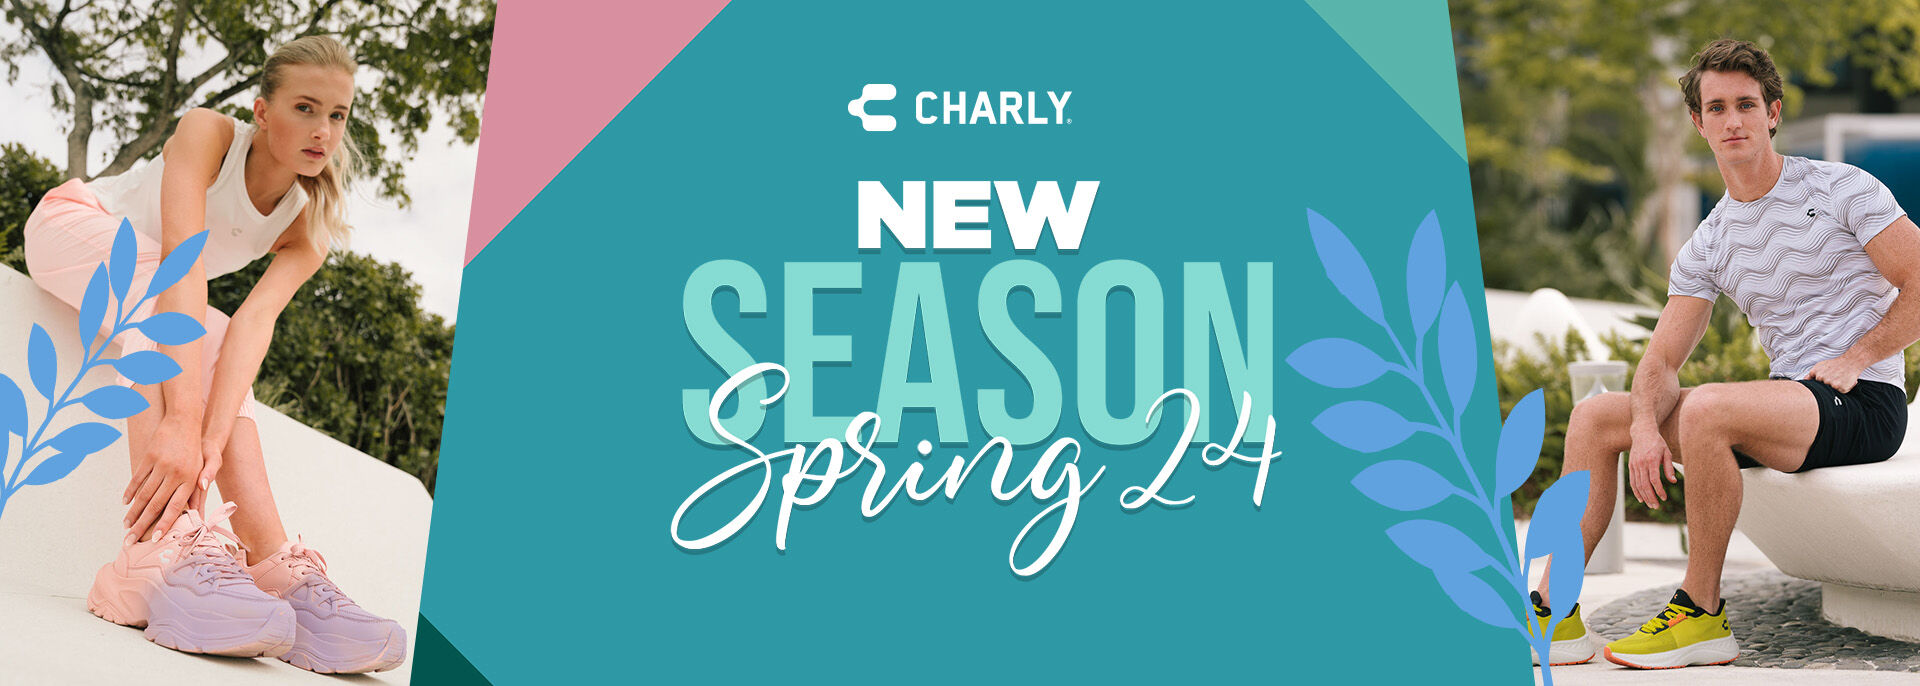 Charly_New_Season_Spring24_2US_D.jpg